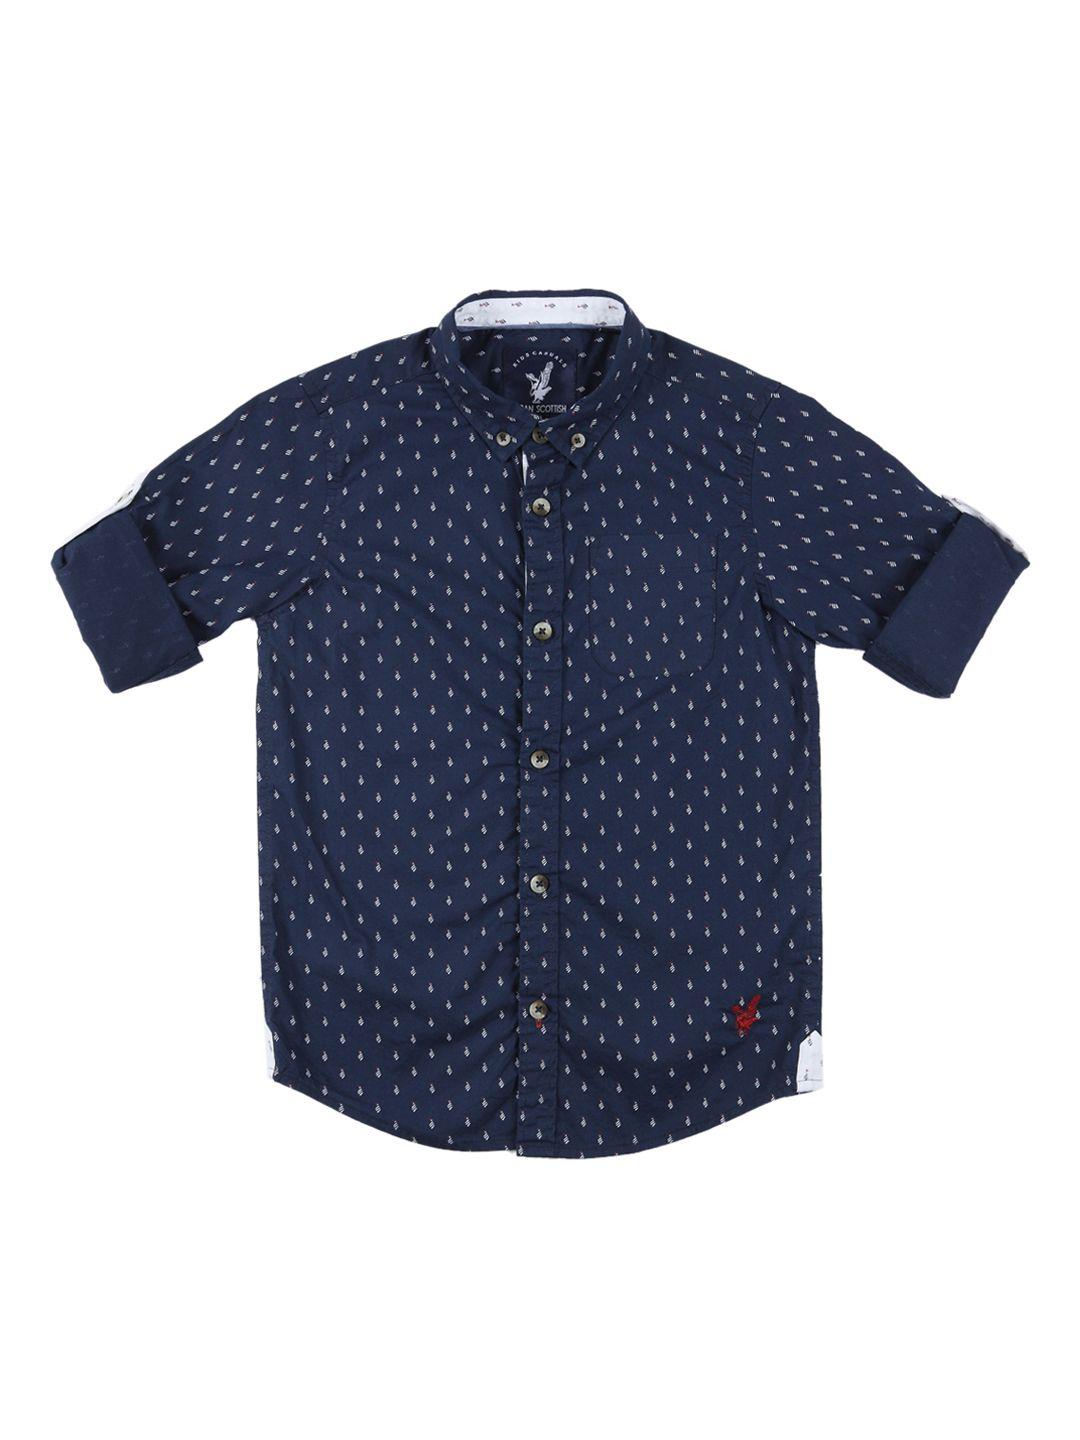 urban scottish boys navy blue standard regular fit printed casual shirt